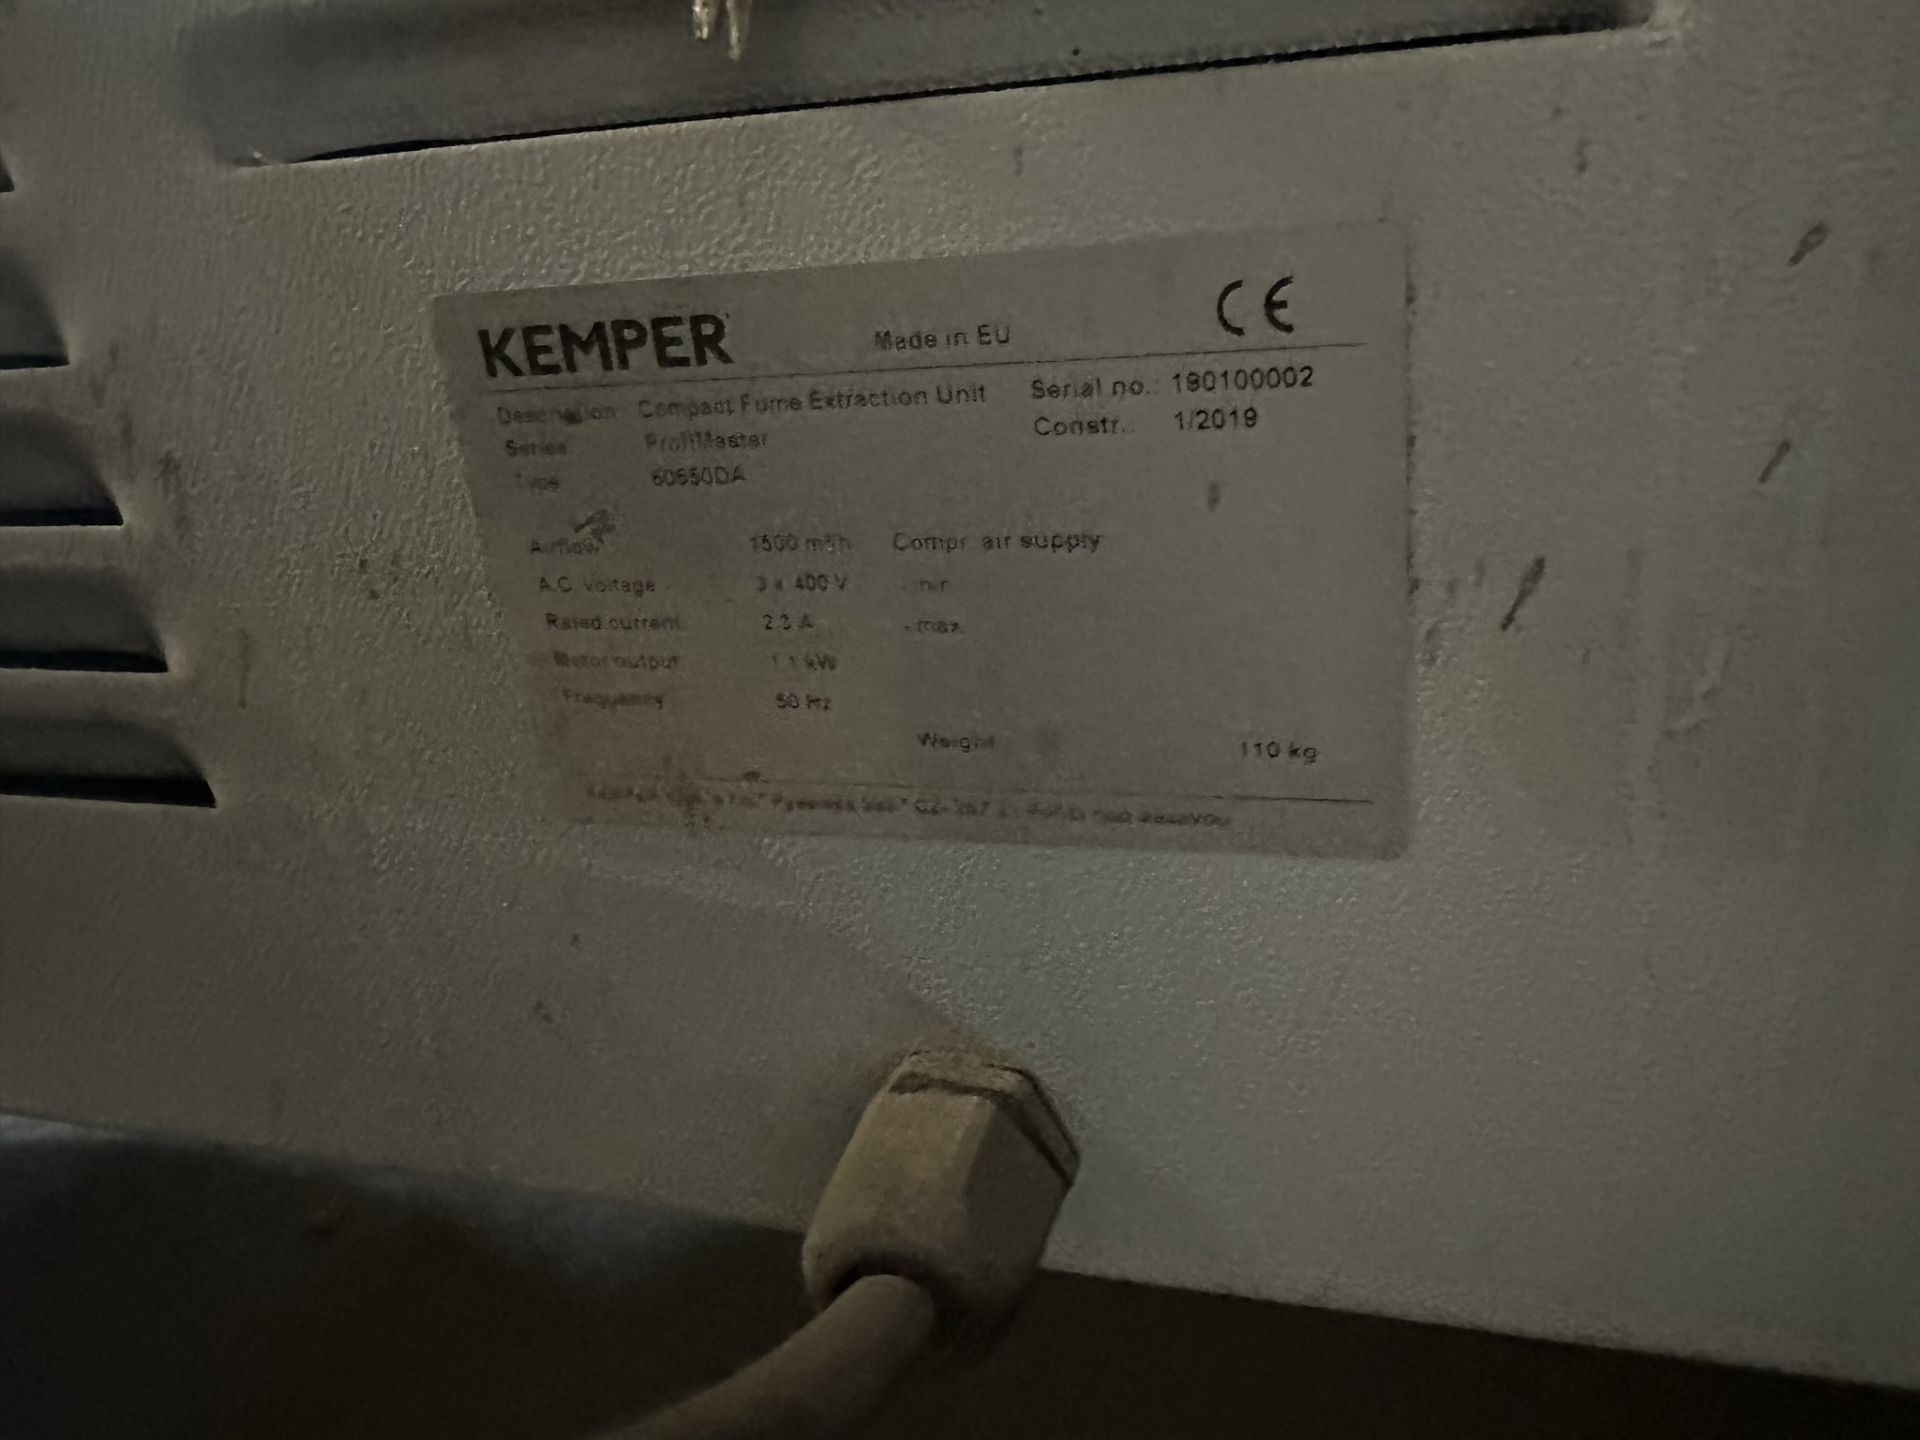 Kemper ProfiMaster - Image 3 of 3